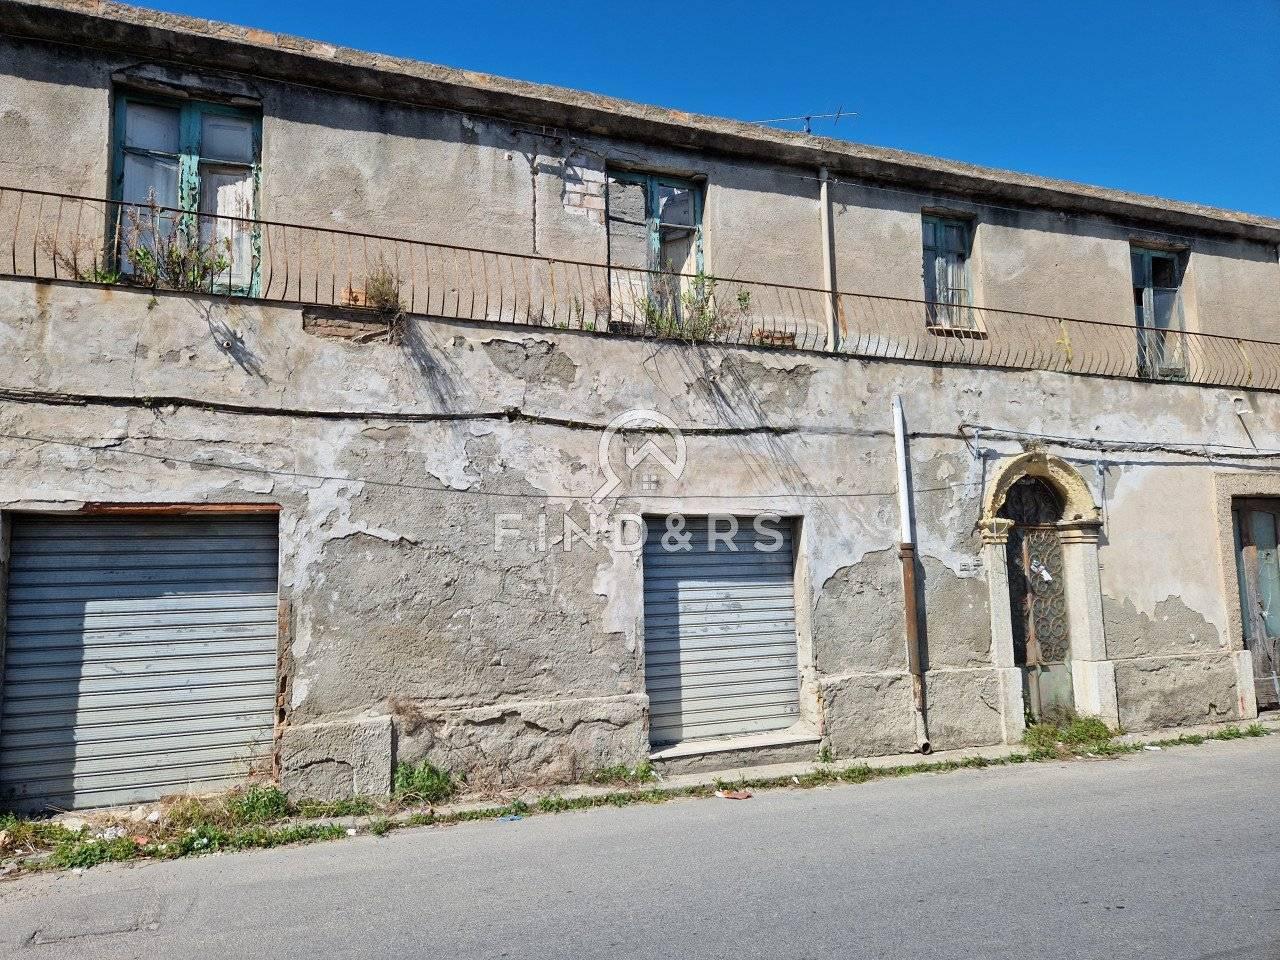 Casa indipendente in vendita a Reggio Calabria